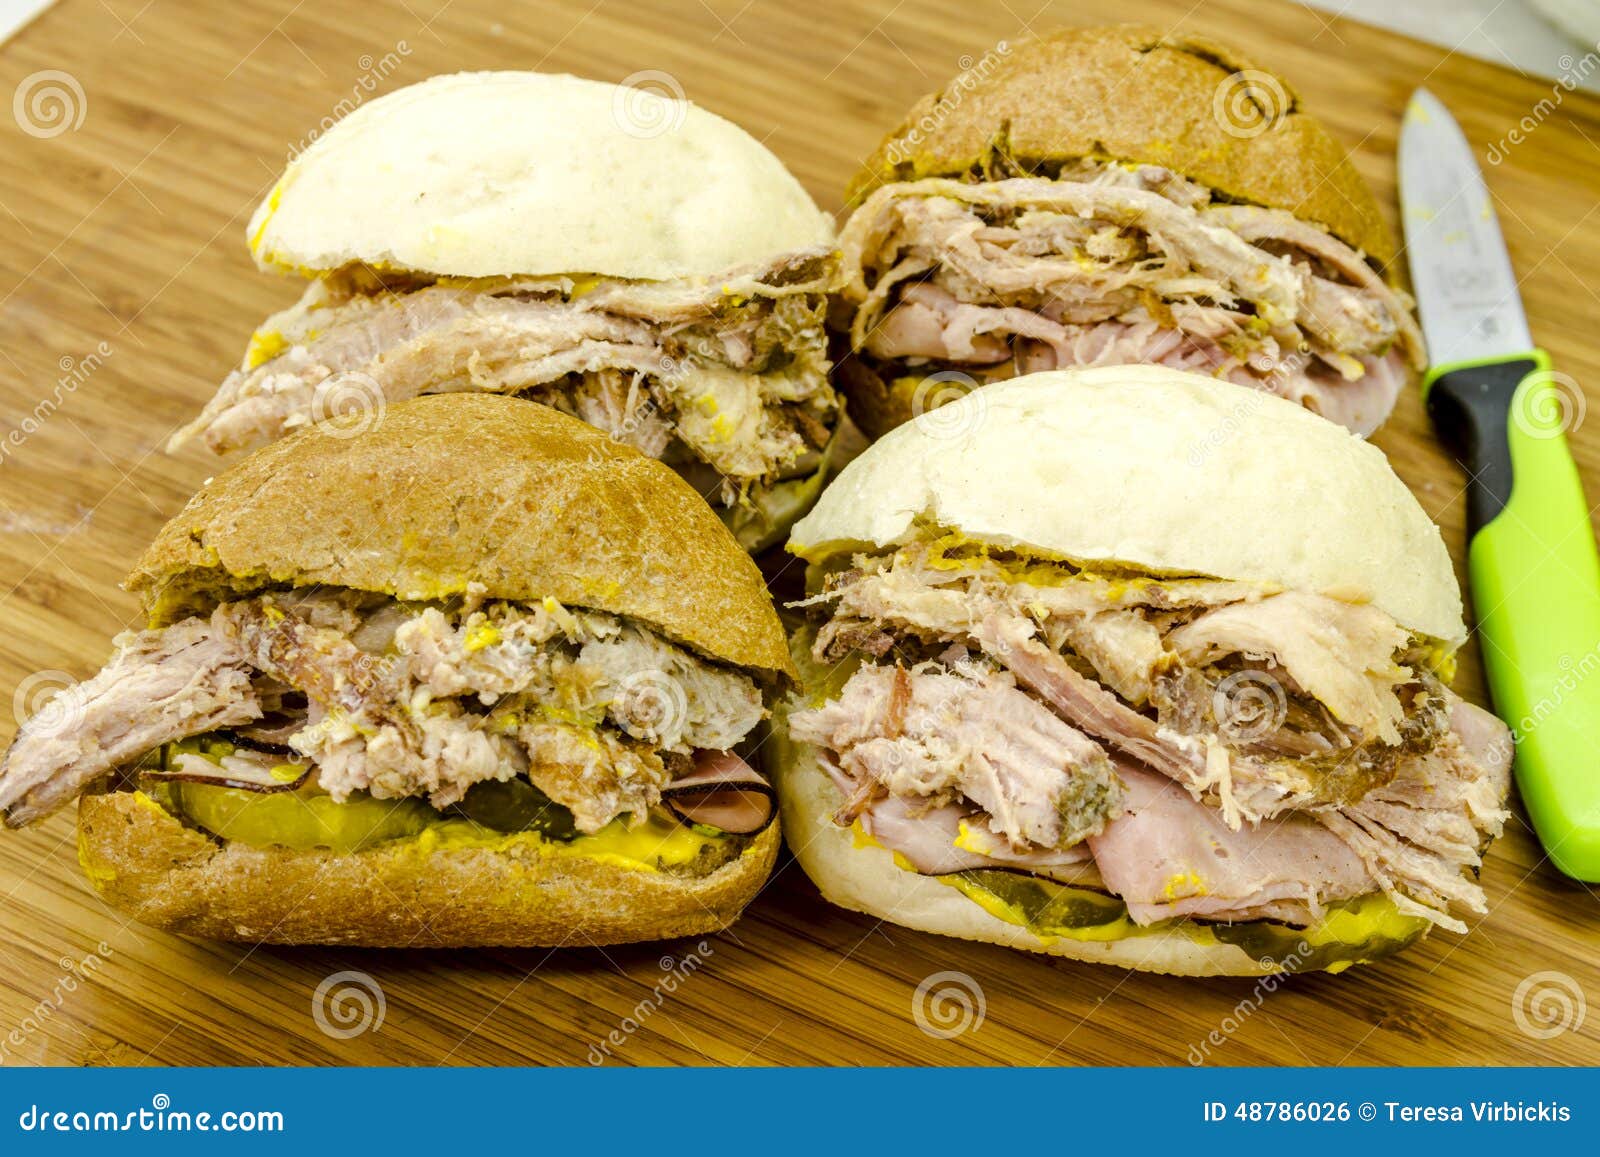 classic cuban medianoche sandwiches